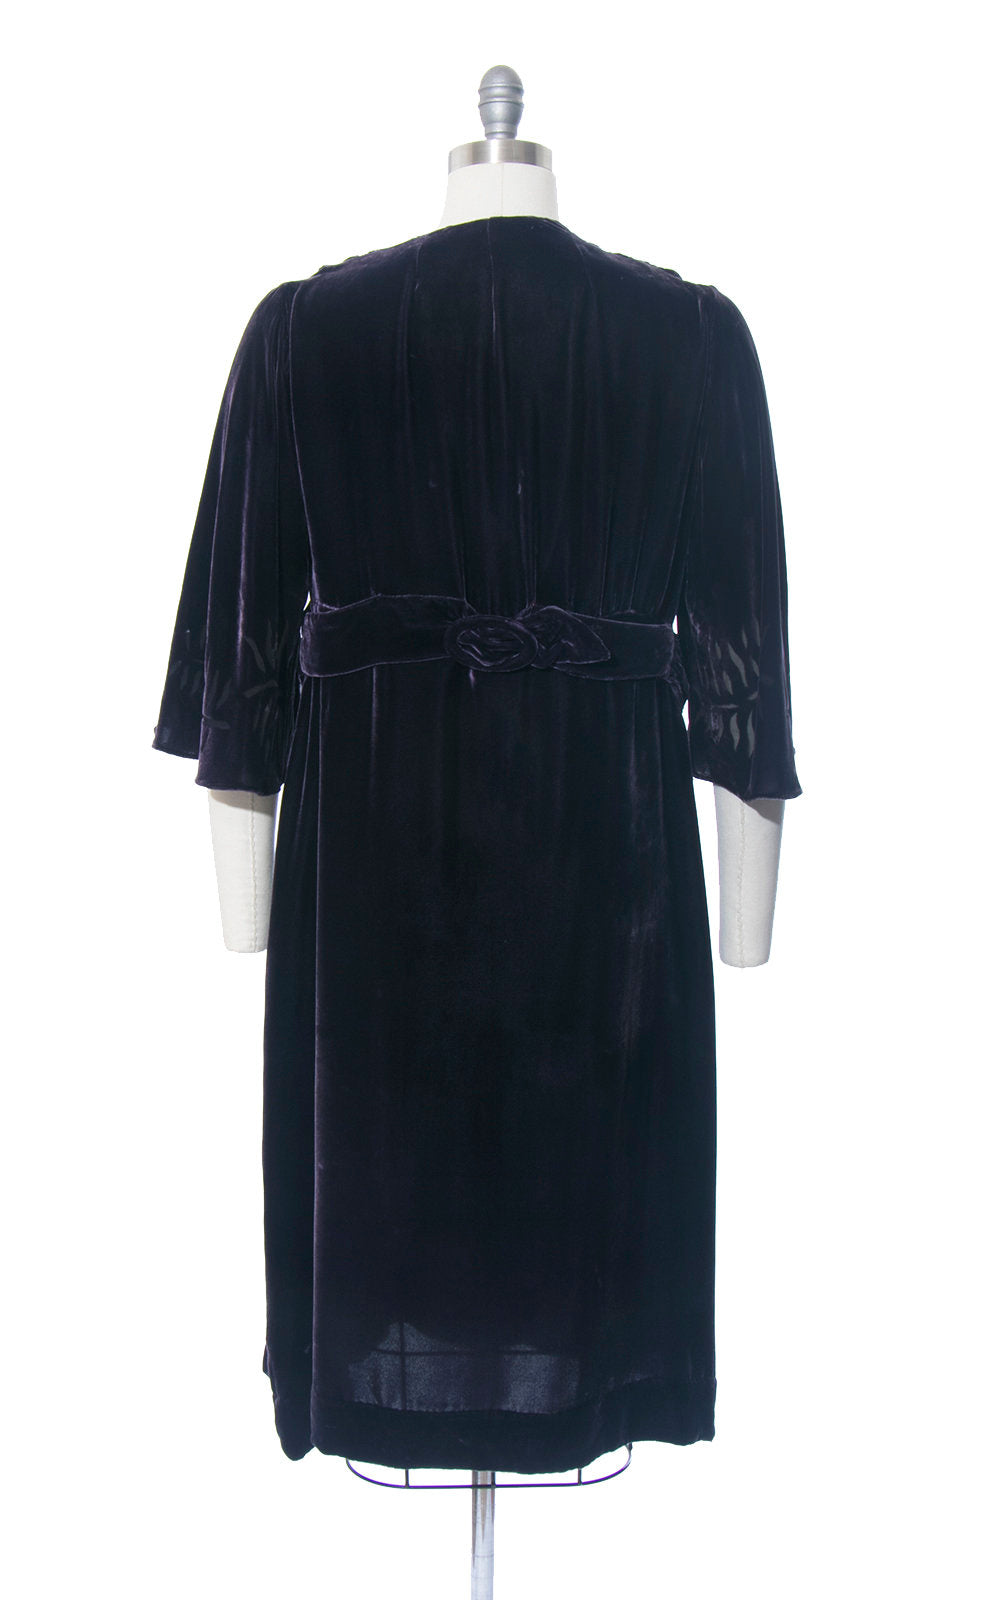 Vintage 1930s Dress | 30s Silk Velvet Sheer Leaf Burnout Dramatic Butterfly Sleeve Dark Blue Purple Formal Evening Gown (medium/large)